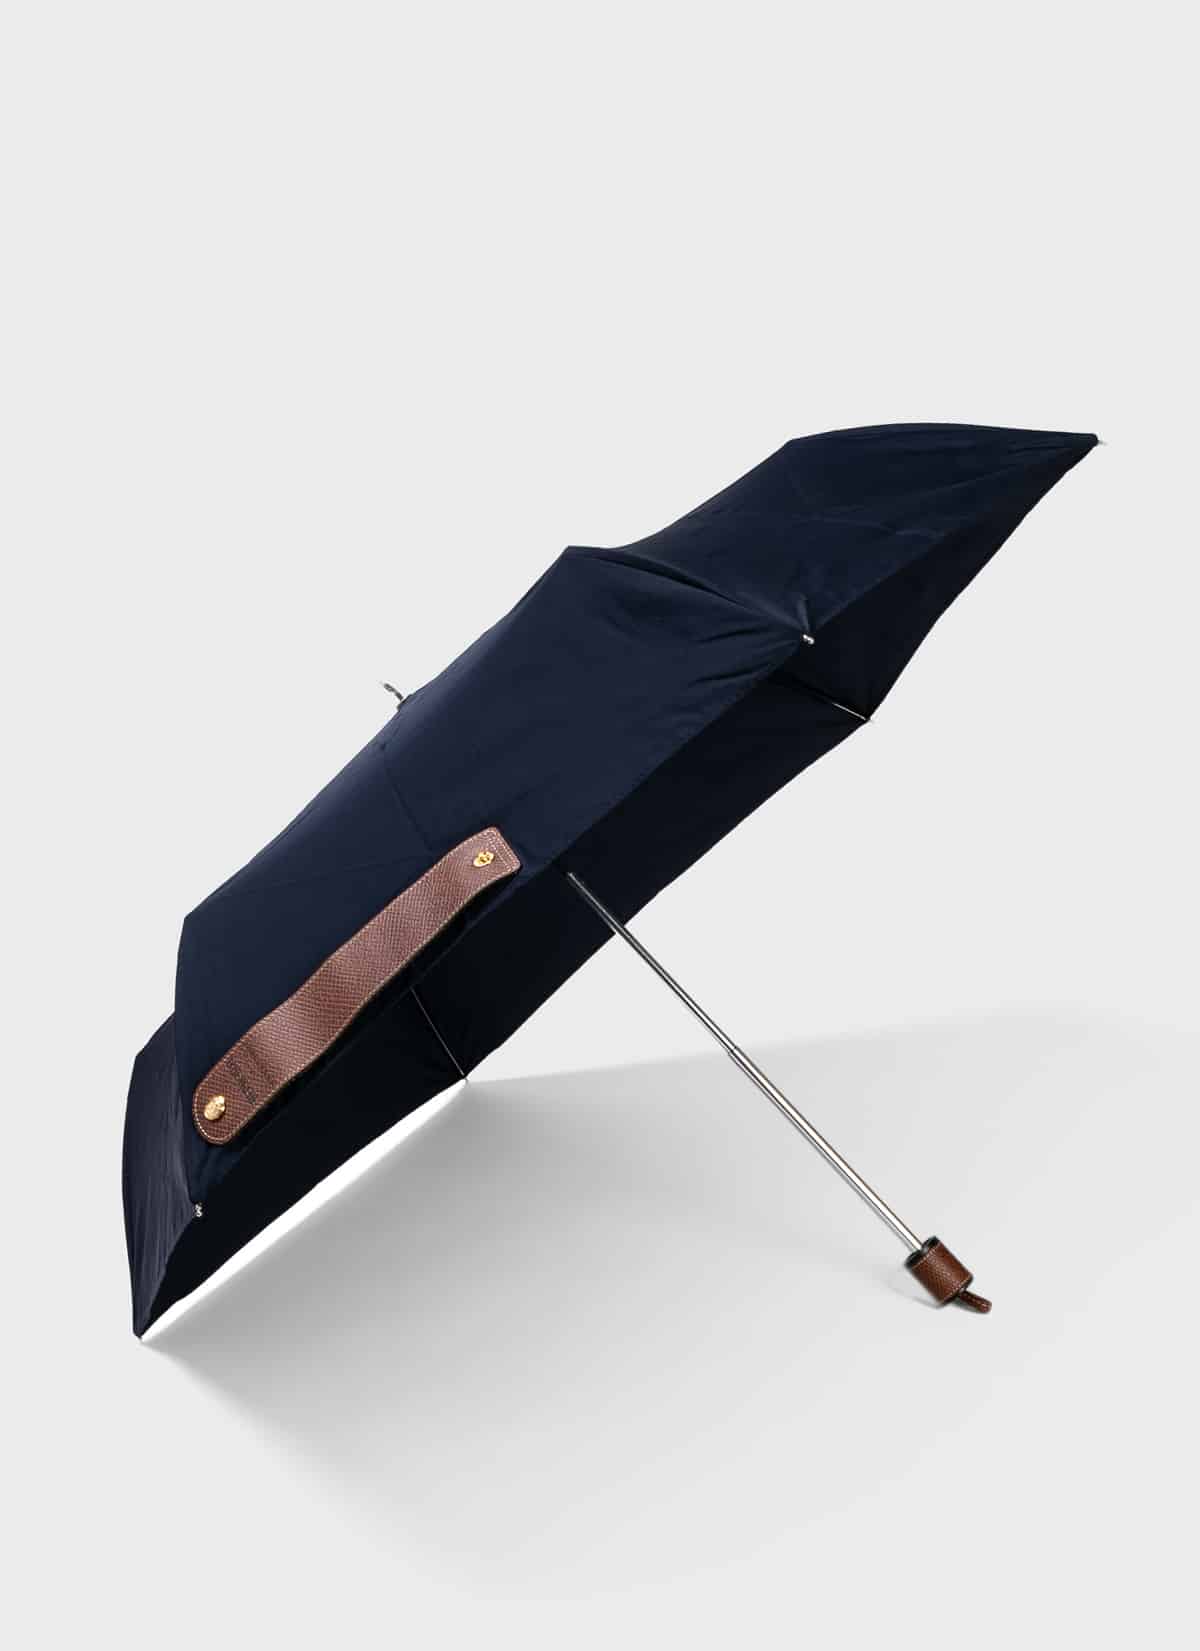 D’heygere X Longchamp Convertible Umbrella Navy